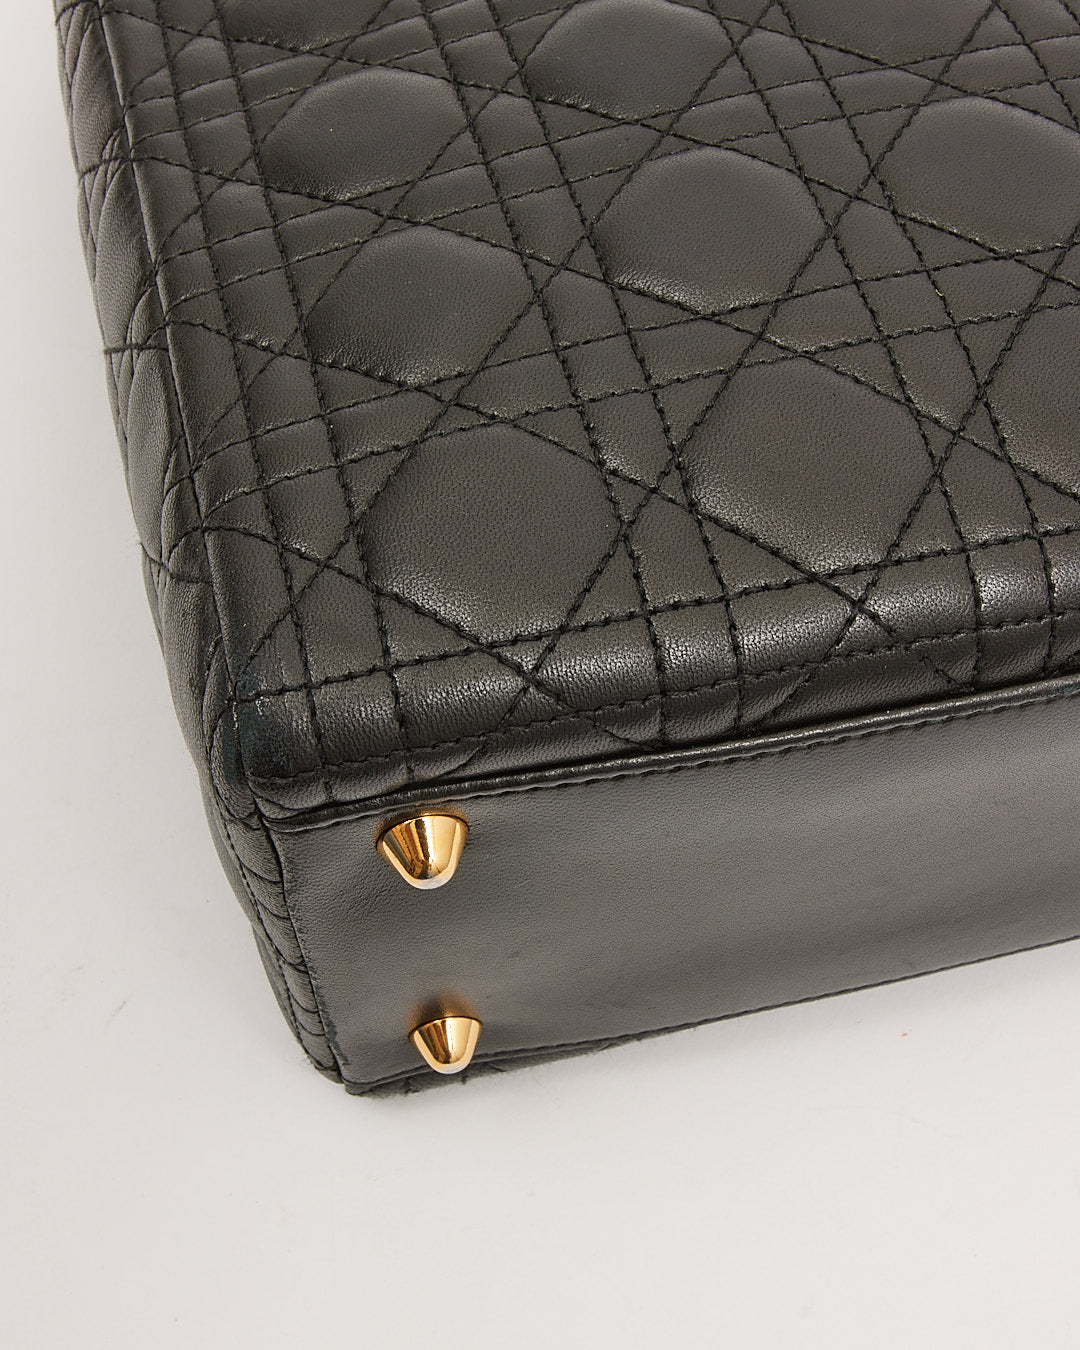 Grand sac à poignée supérieure Lady Dior Cannage noir Dior